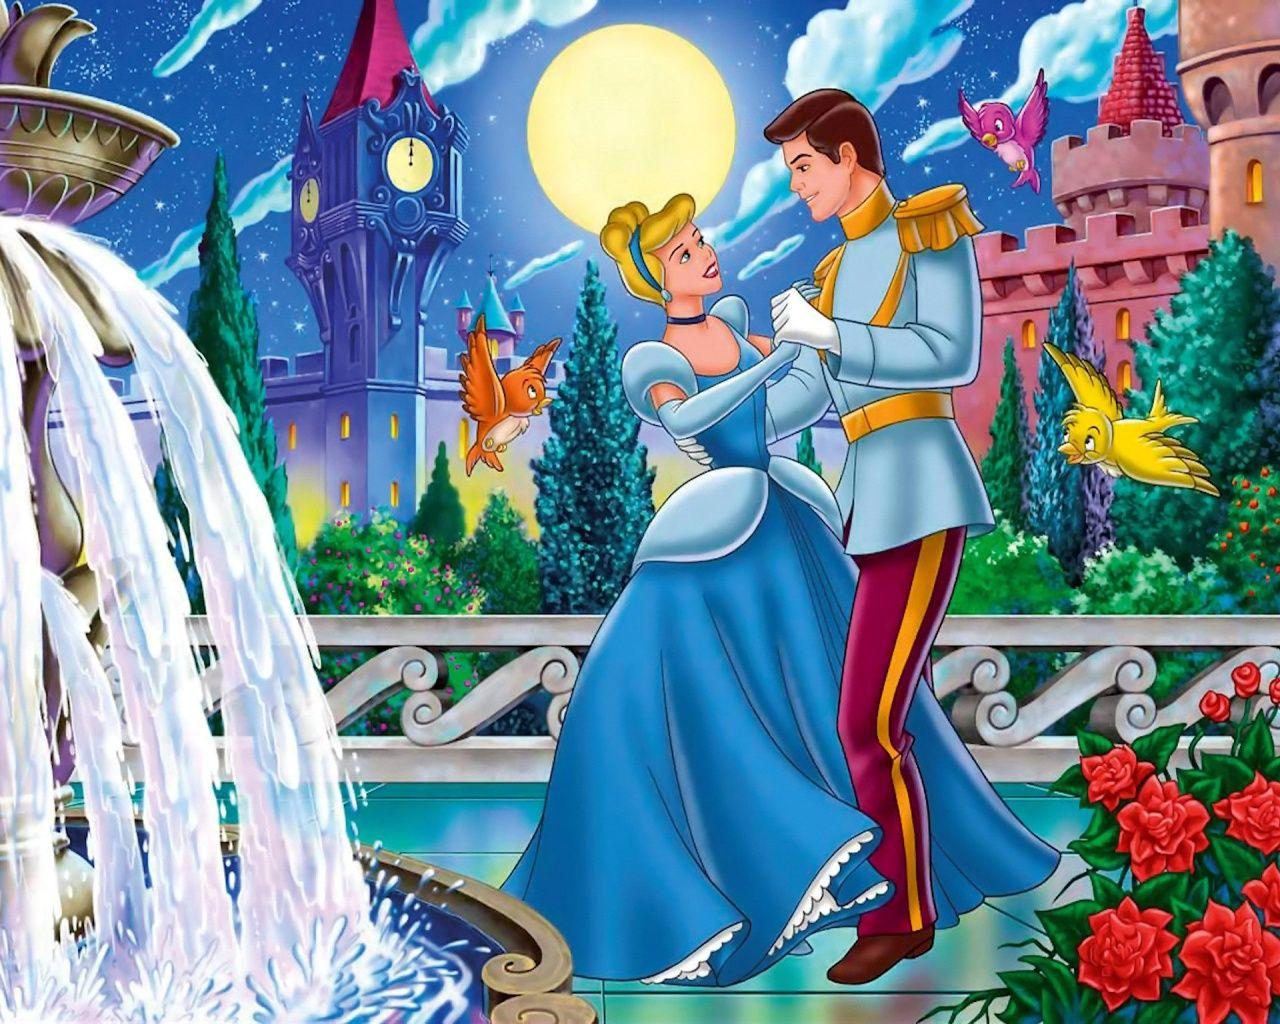 Cinderella HD Wallpaper Image for PC